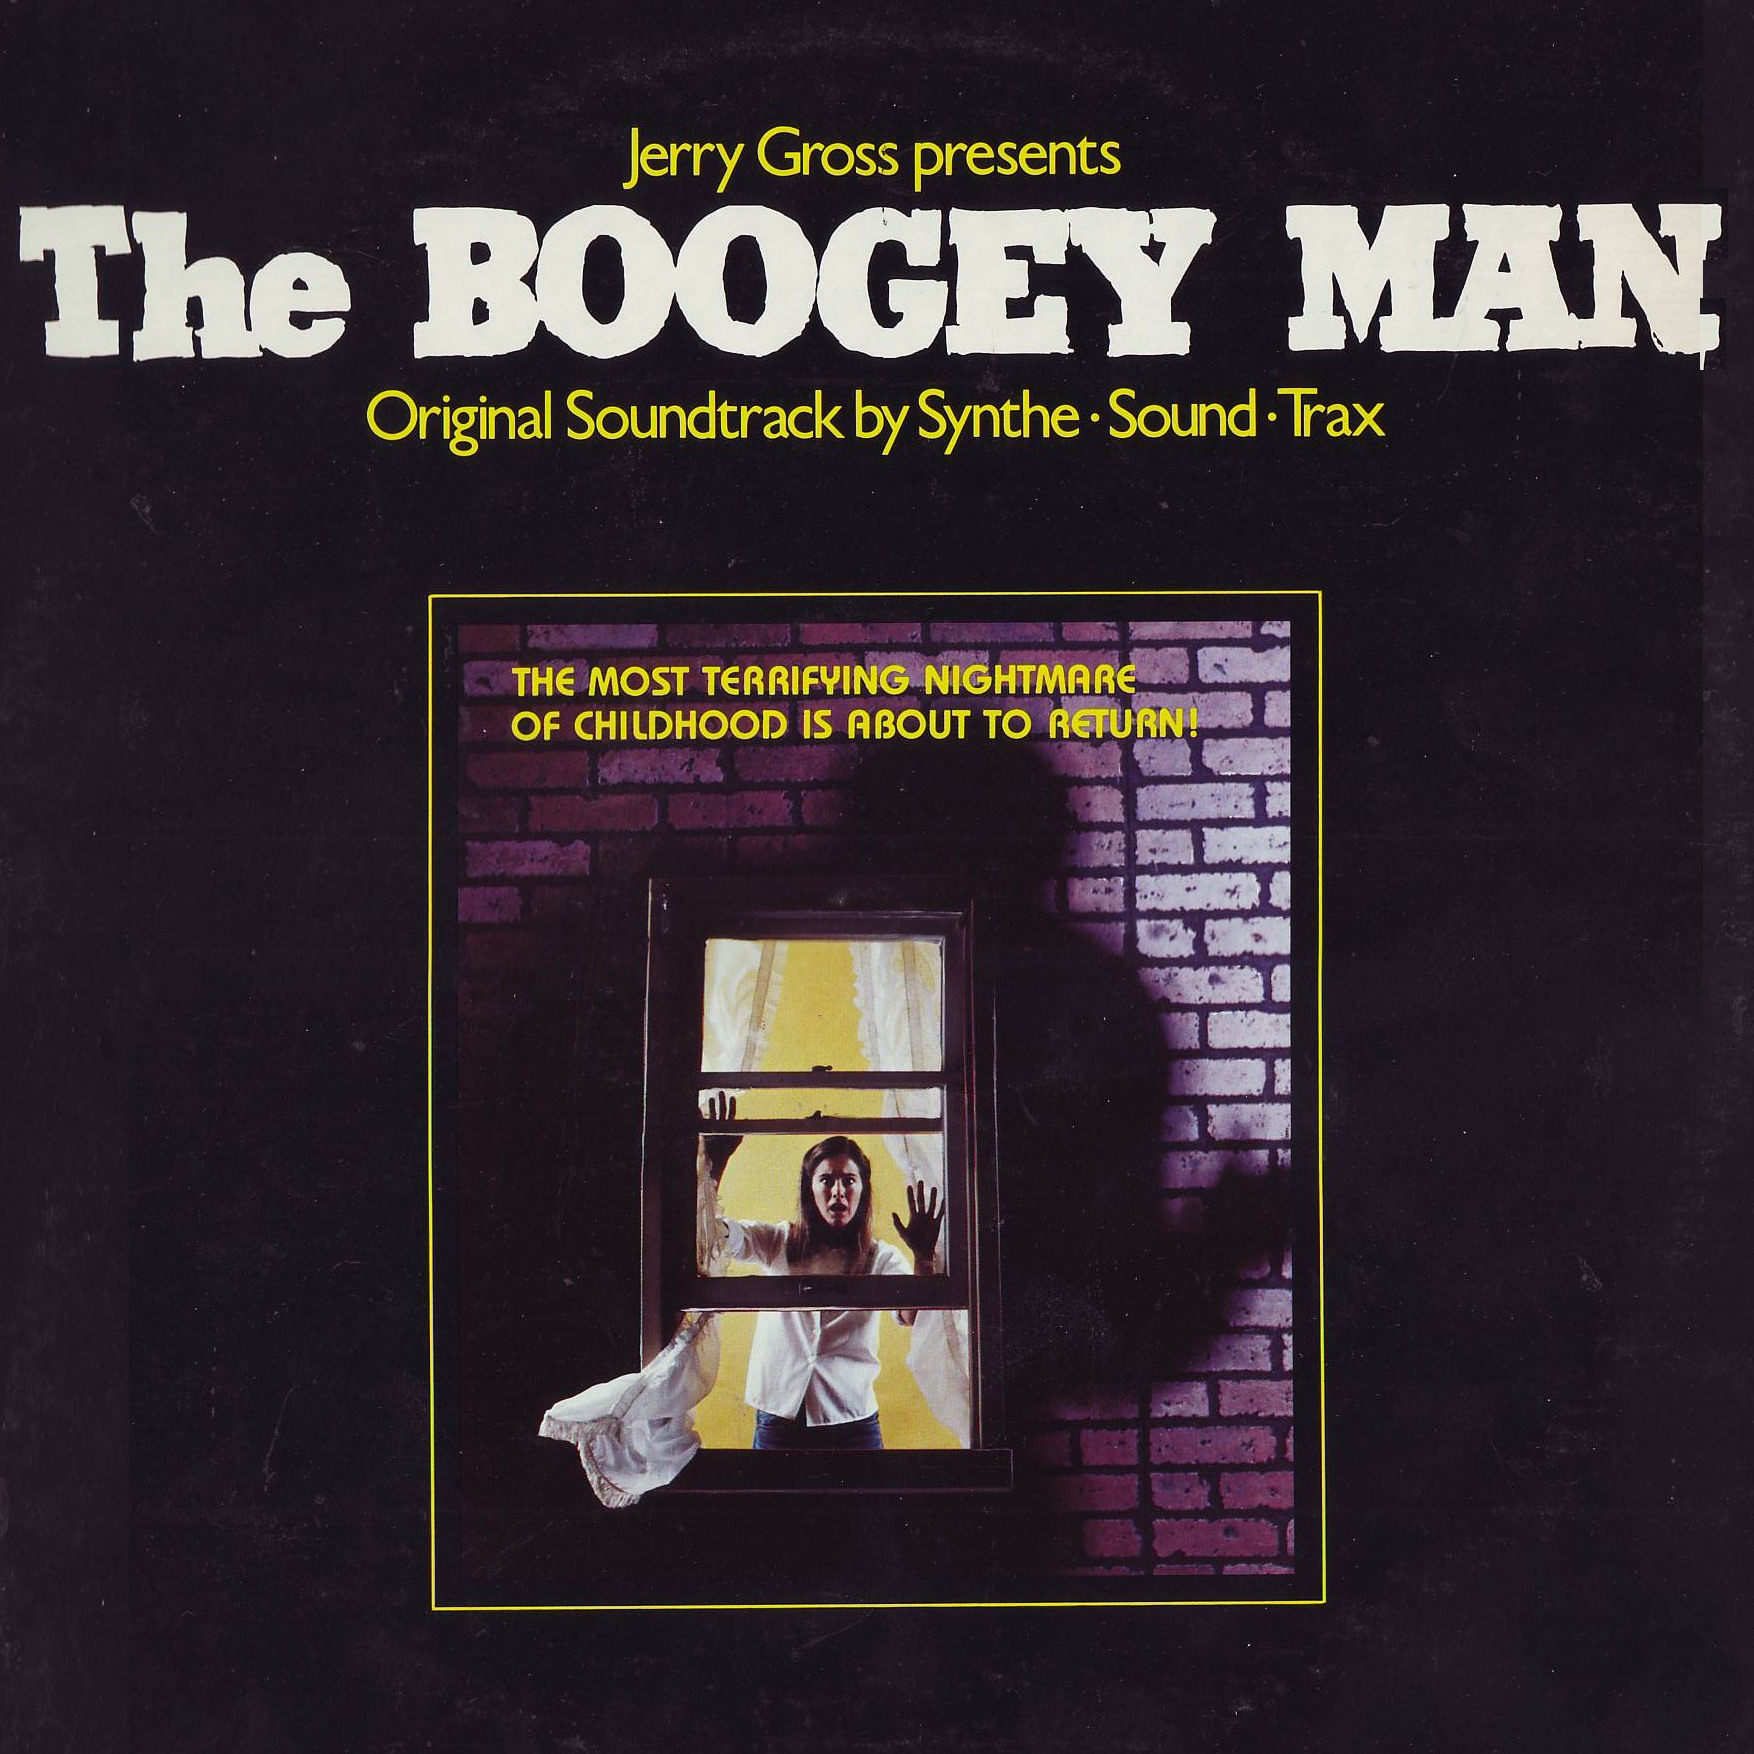 boogey-man-lp-cover